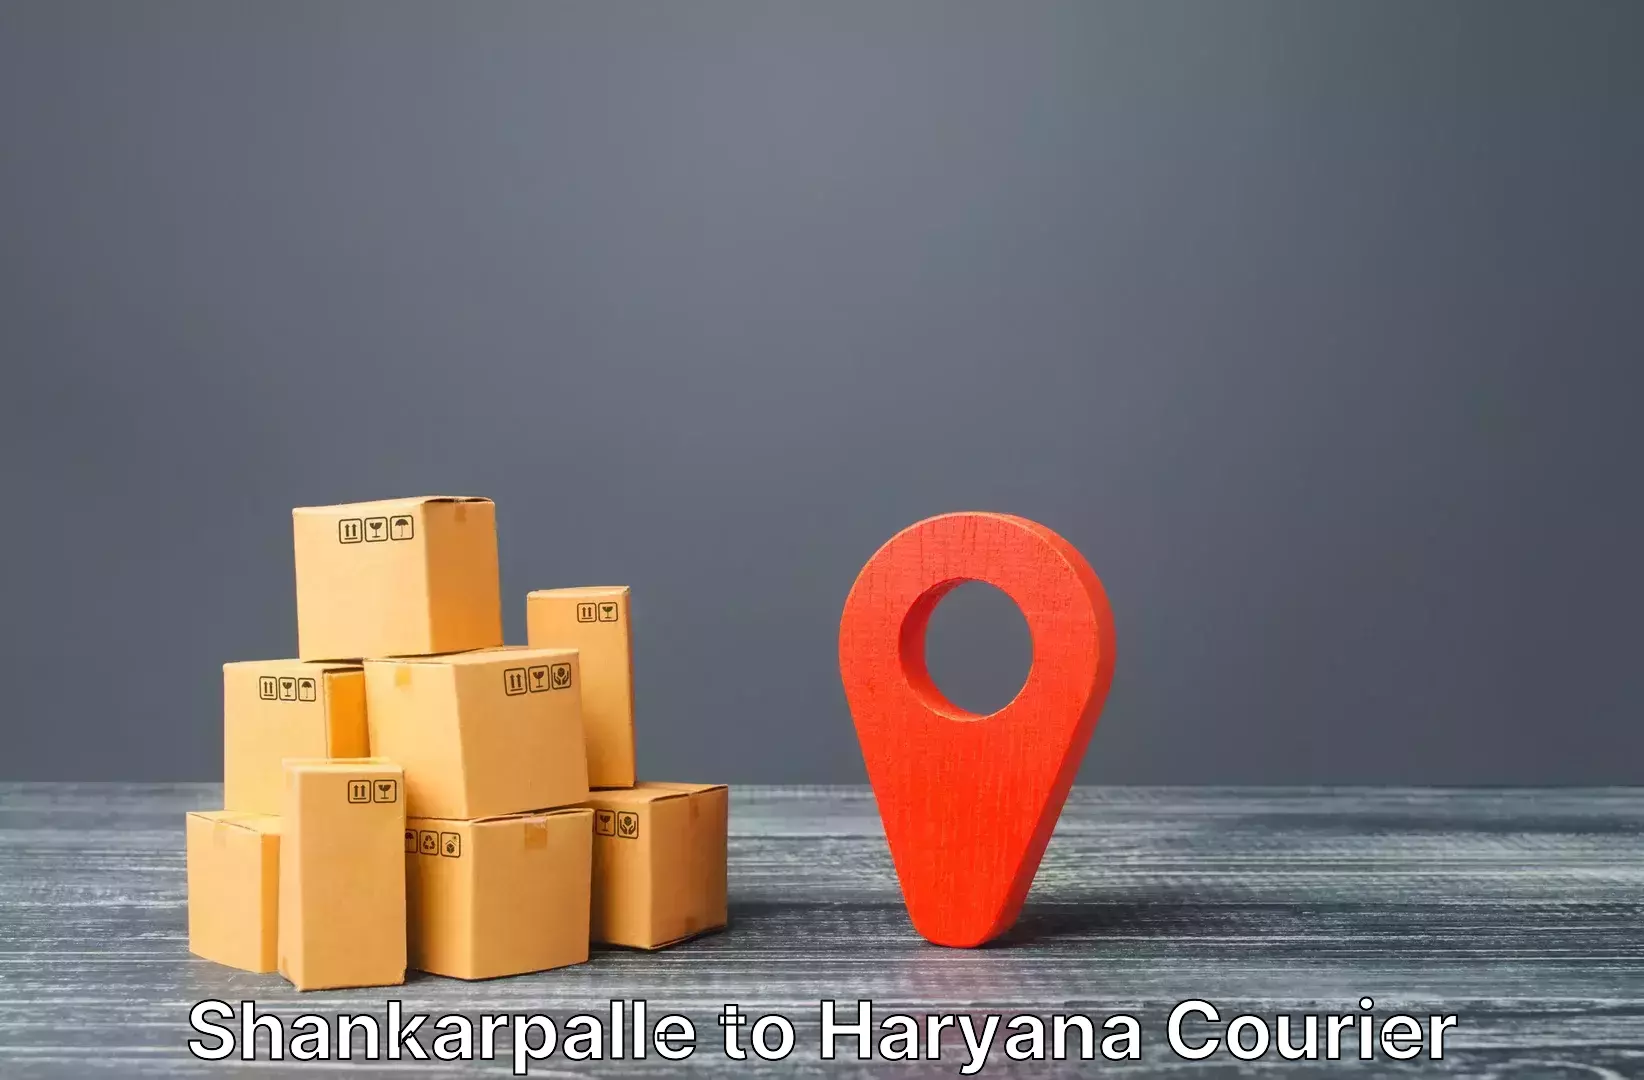 Baggage transport network Shankarpalle to NCR Haryana